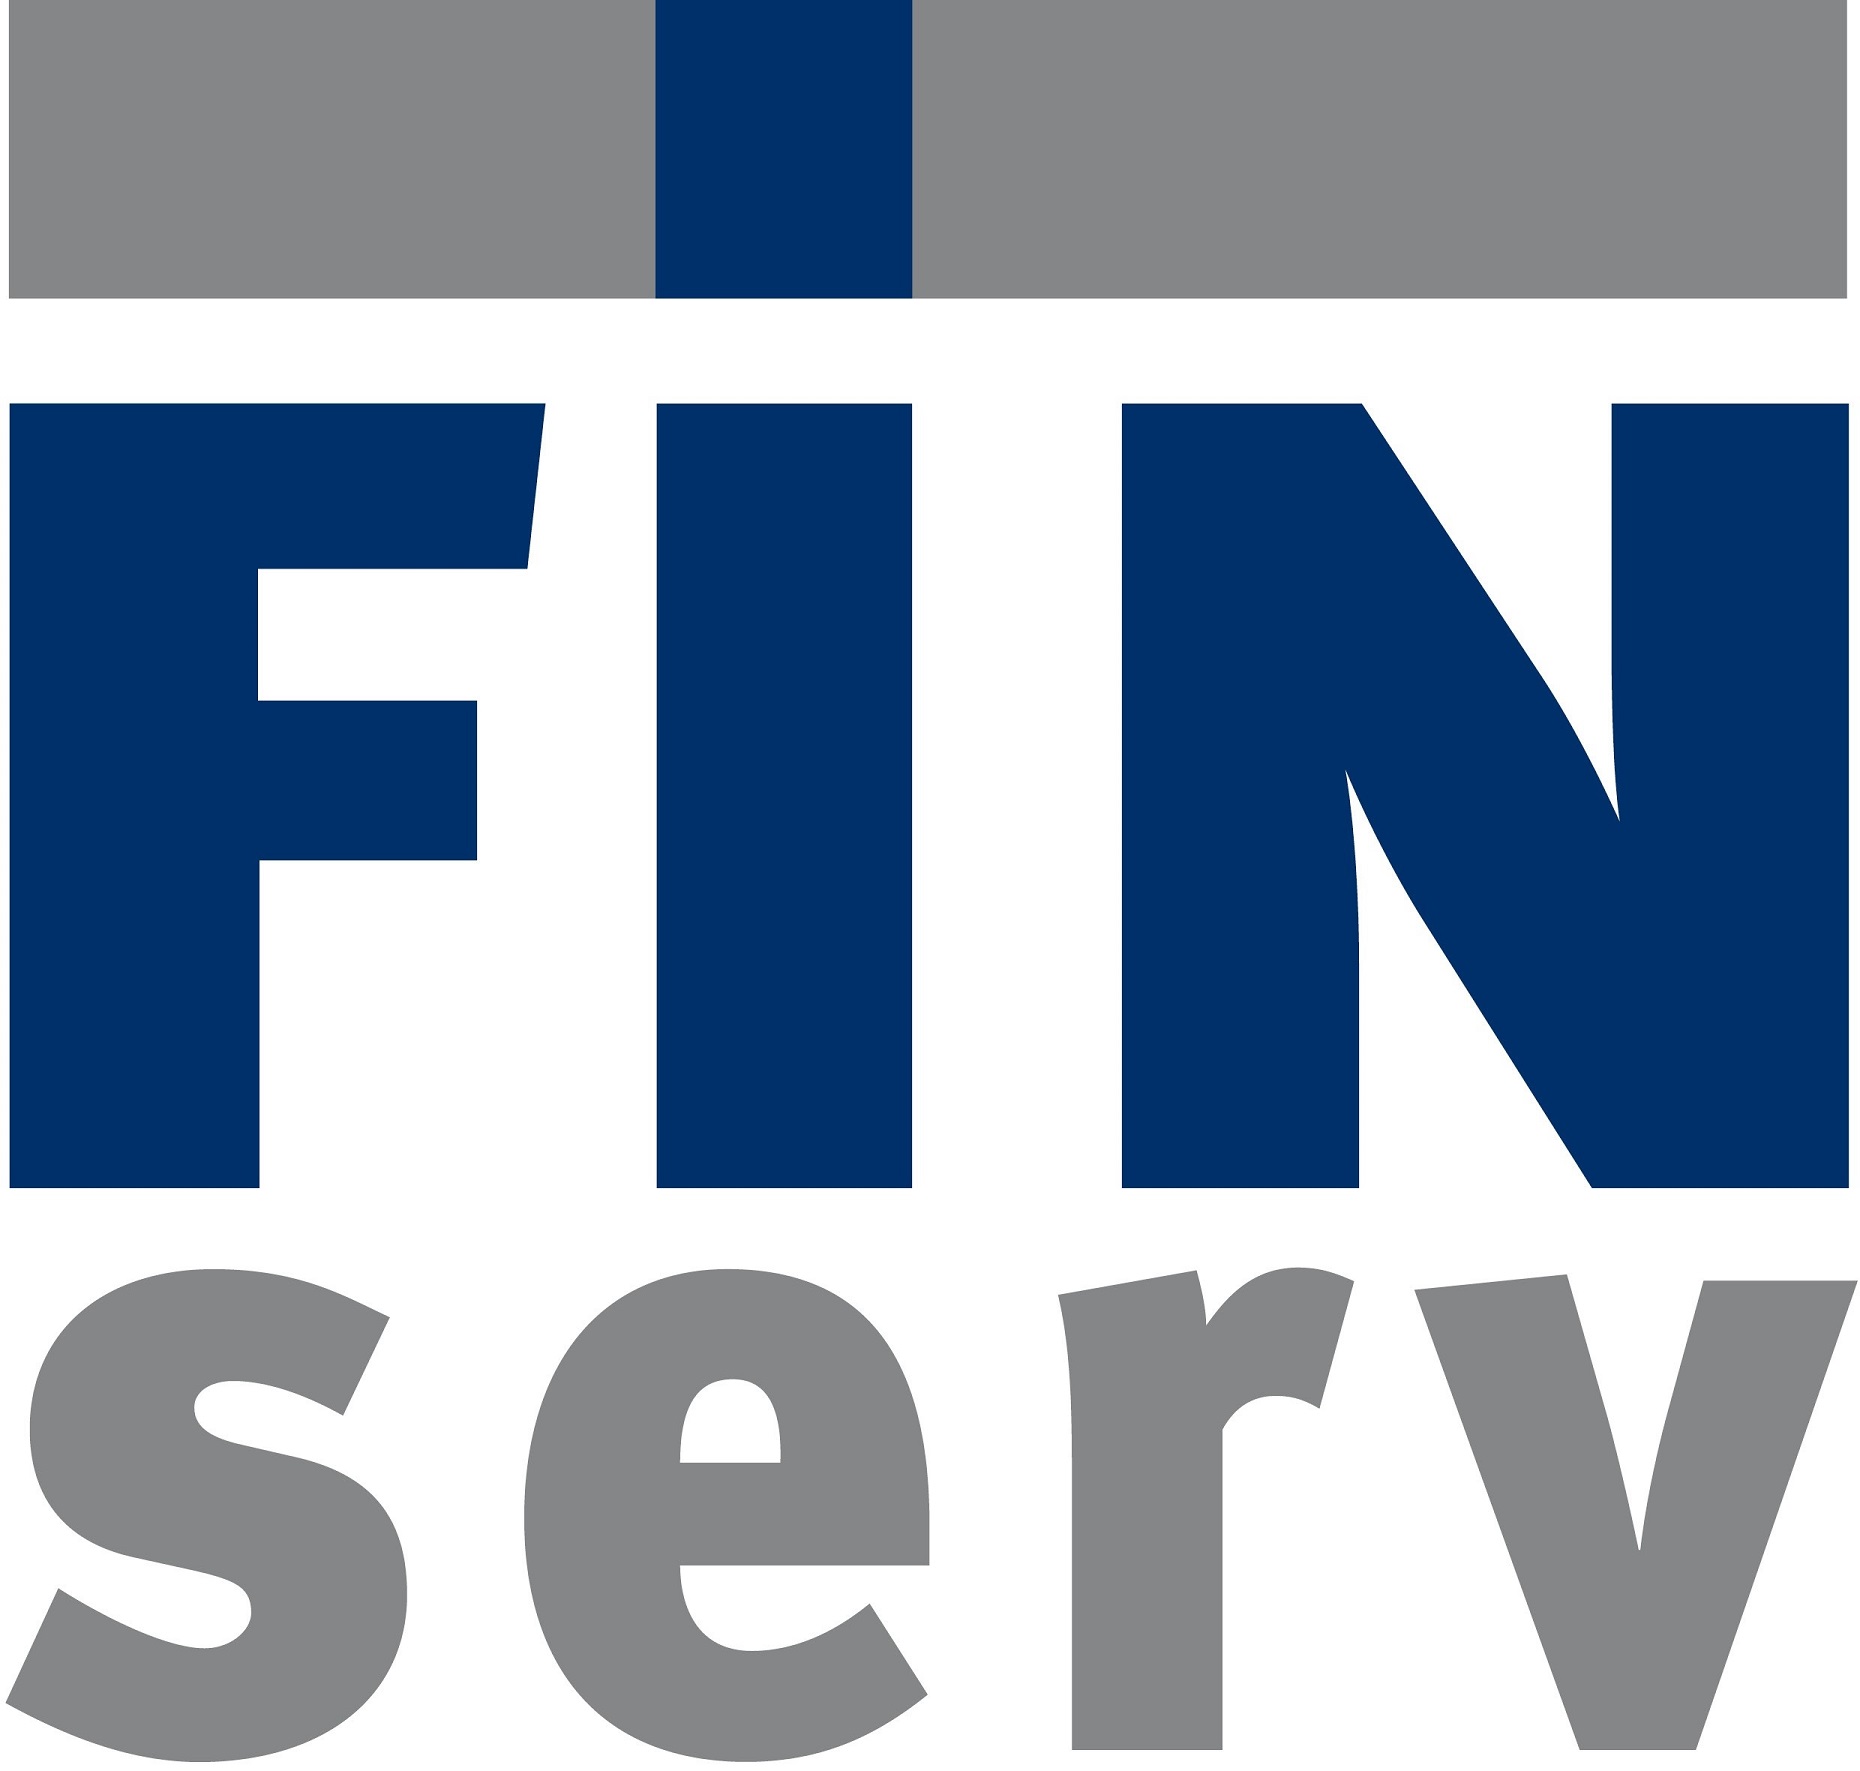 FINserv GmbH